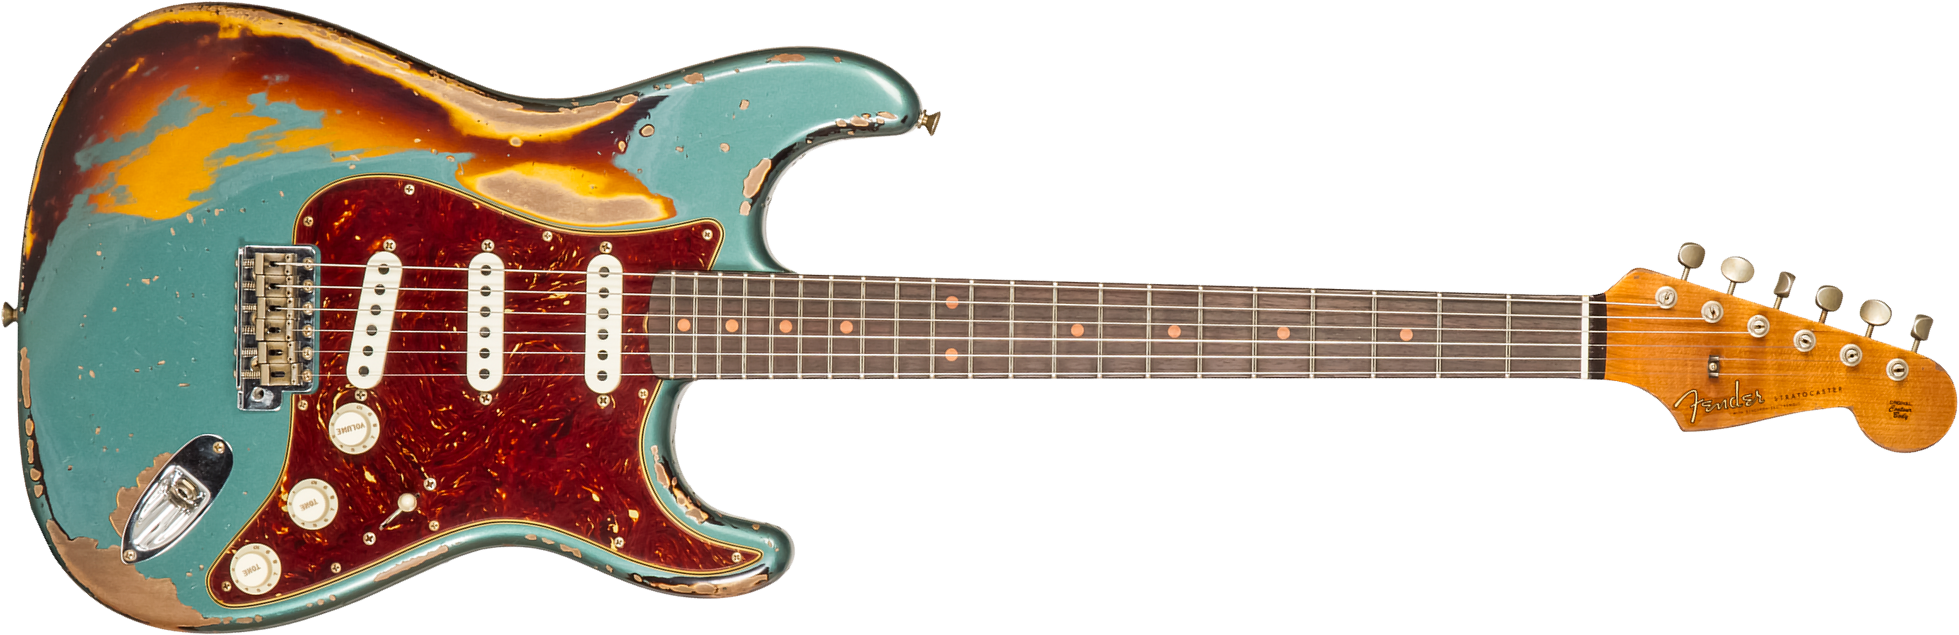 Fender Custom Shop Strat 1961 3s Trem Rw #cz573502 - Super Heavy Relic Sherwood Green Metallic O. 3-cs - Str shape electric guitar - Main picture